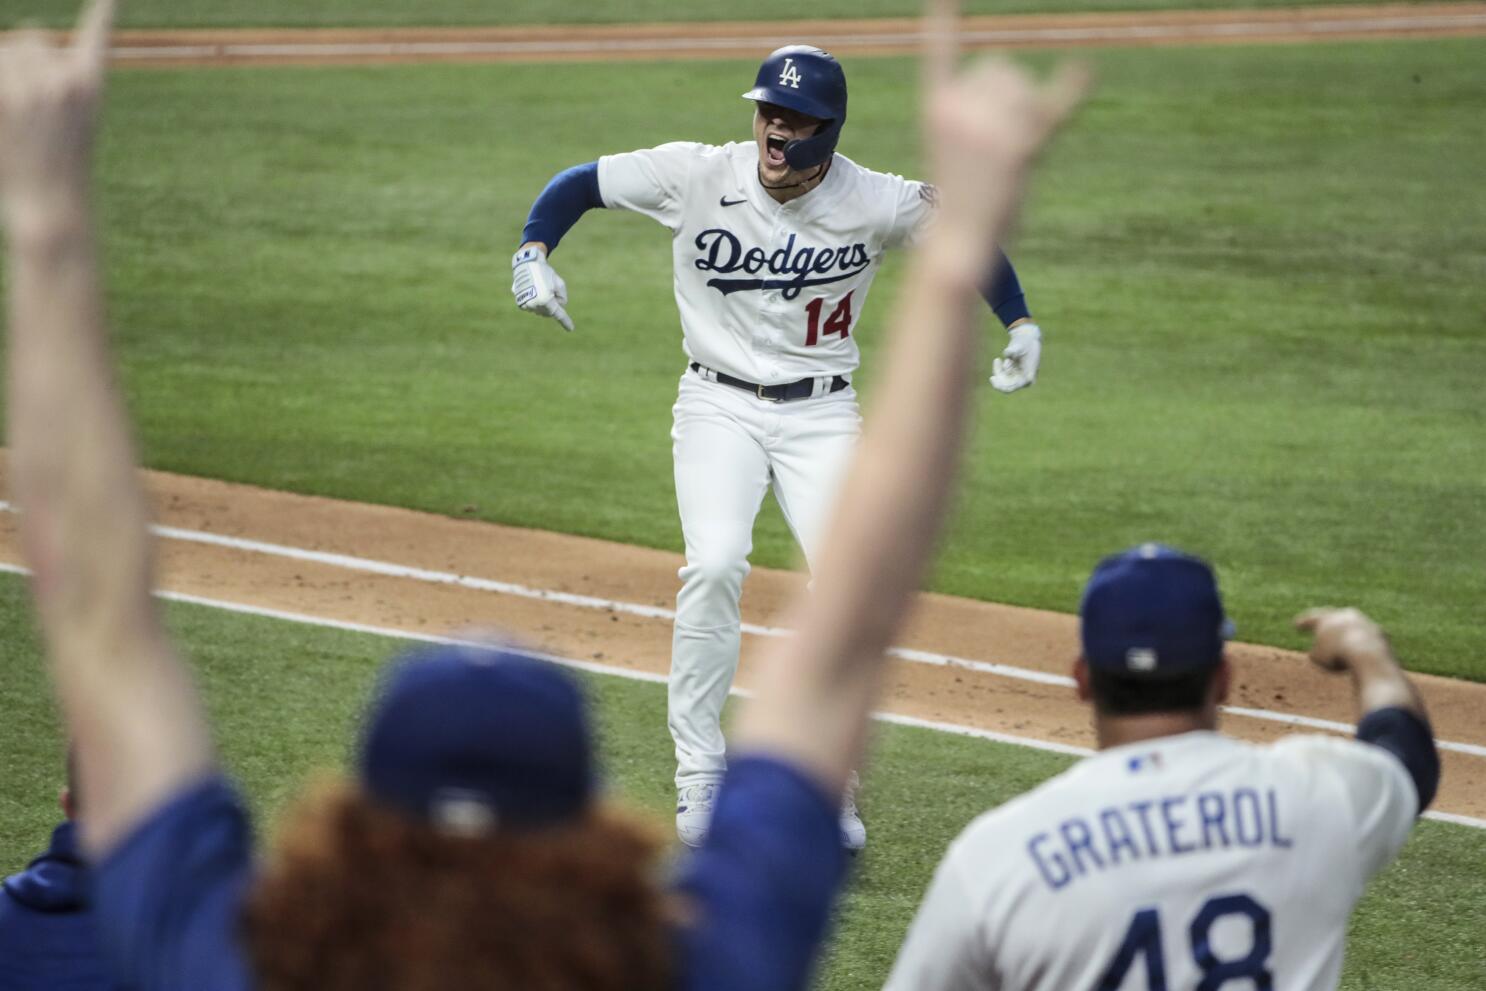 The baseball world reacts to Dee Gordon's incredible lead-off home run